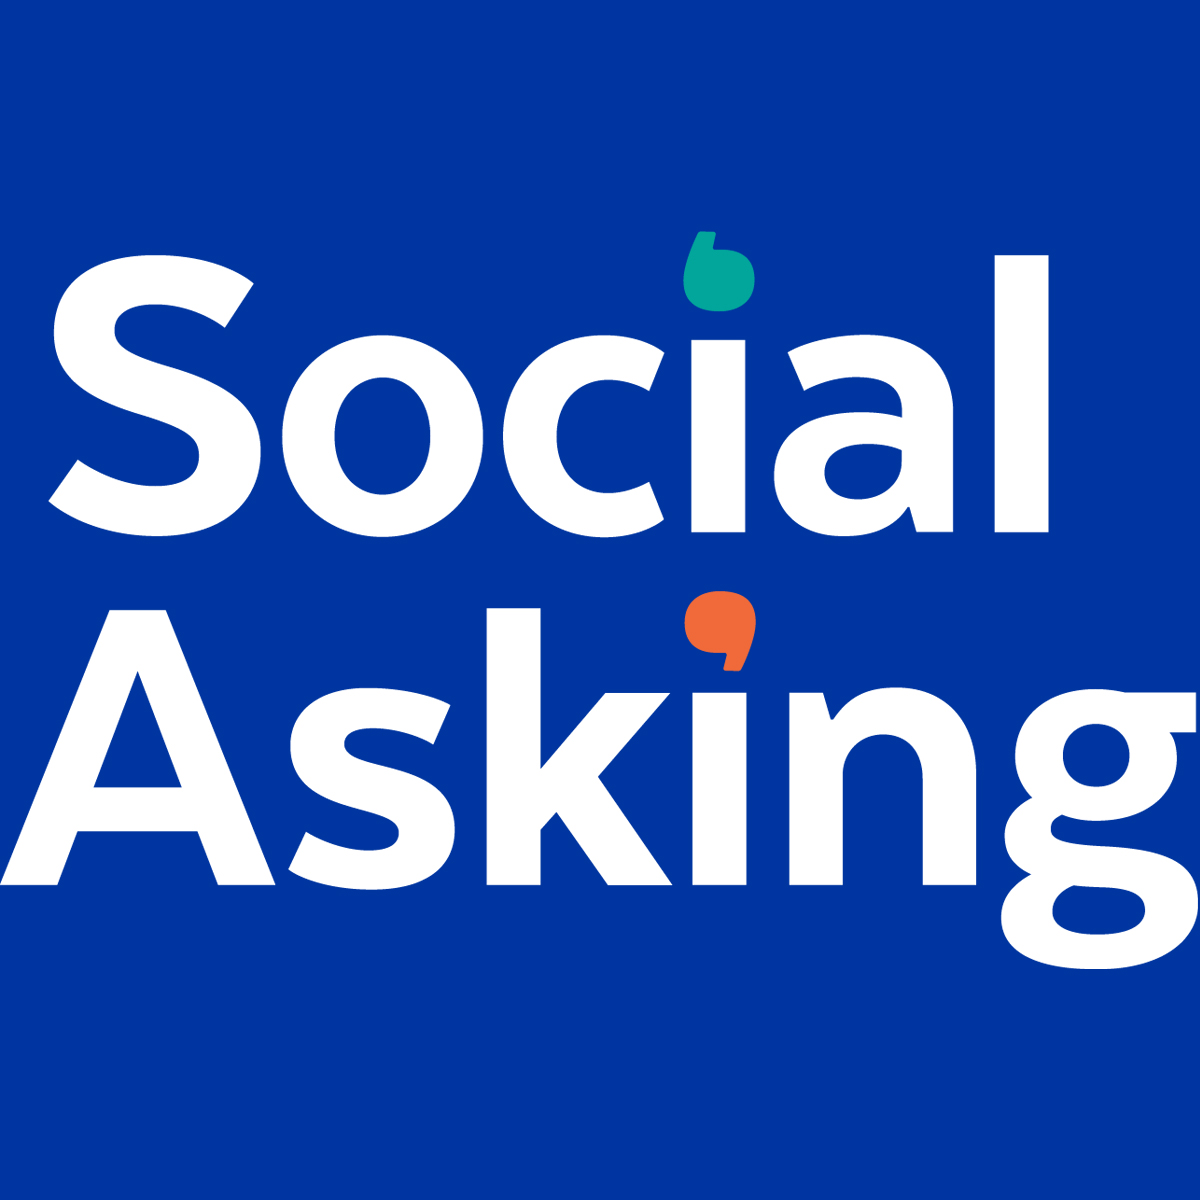 Social Asking